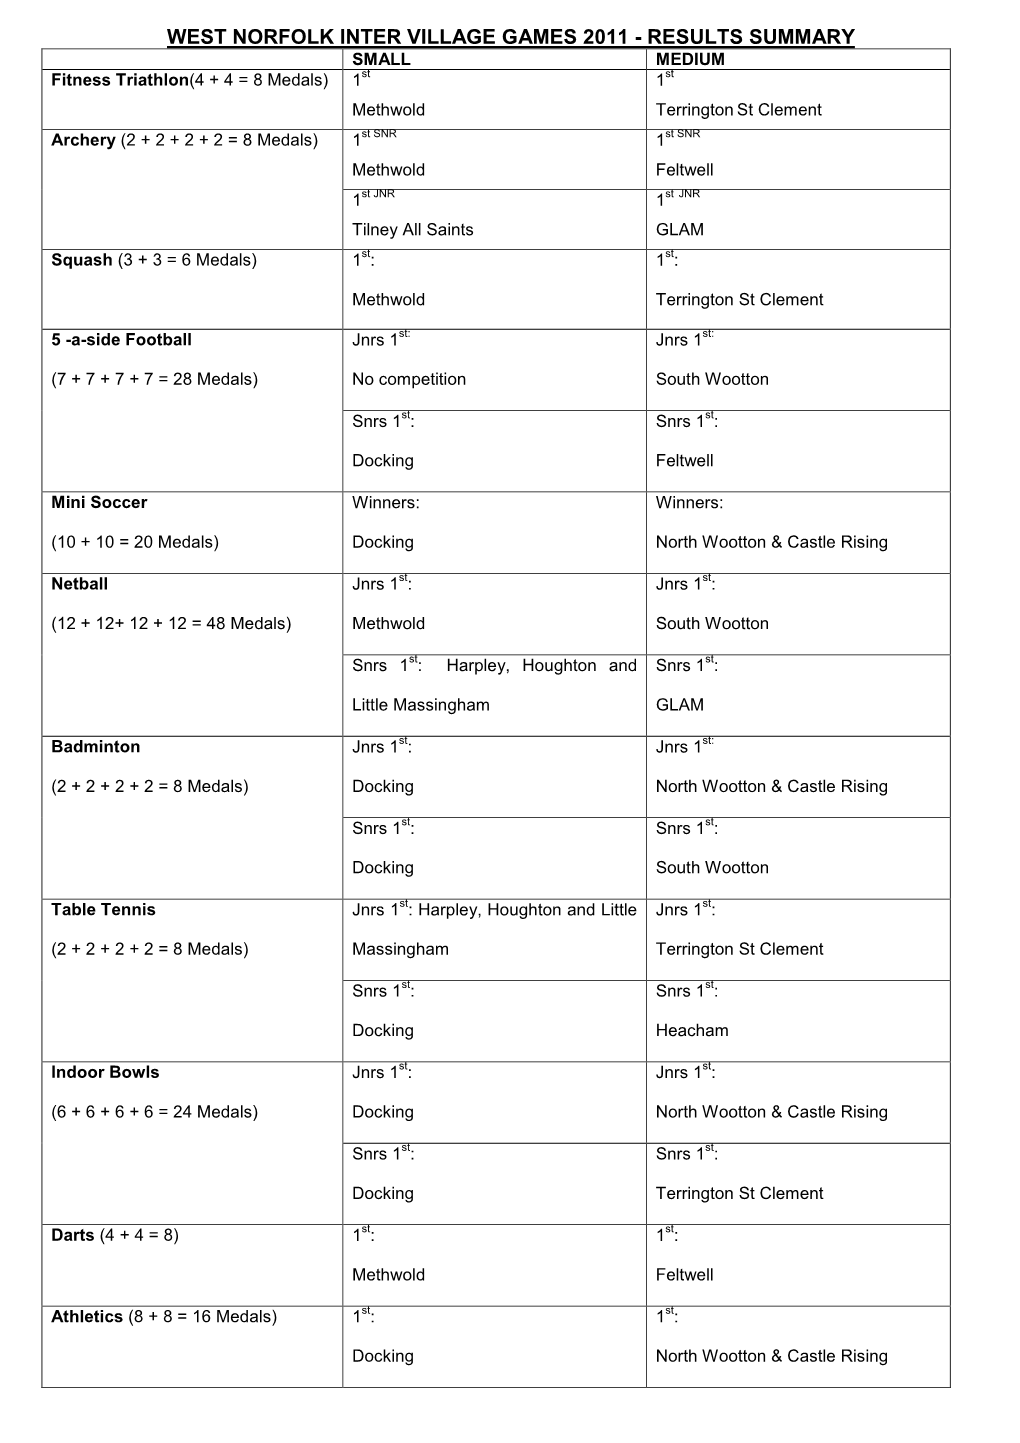 Results Summary Sheet 2011